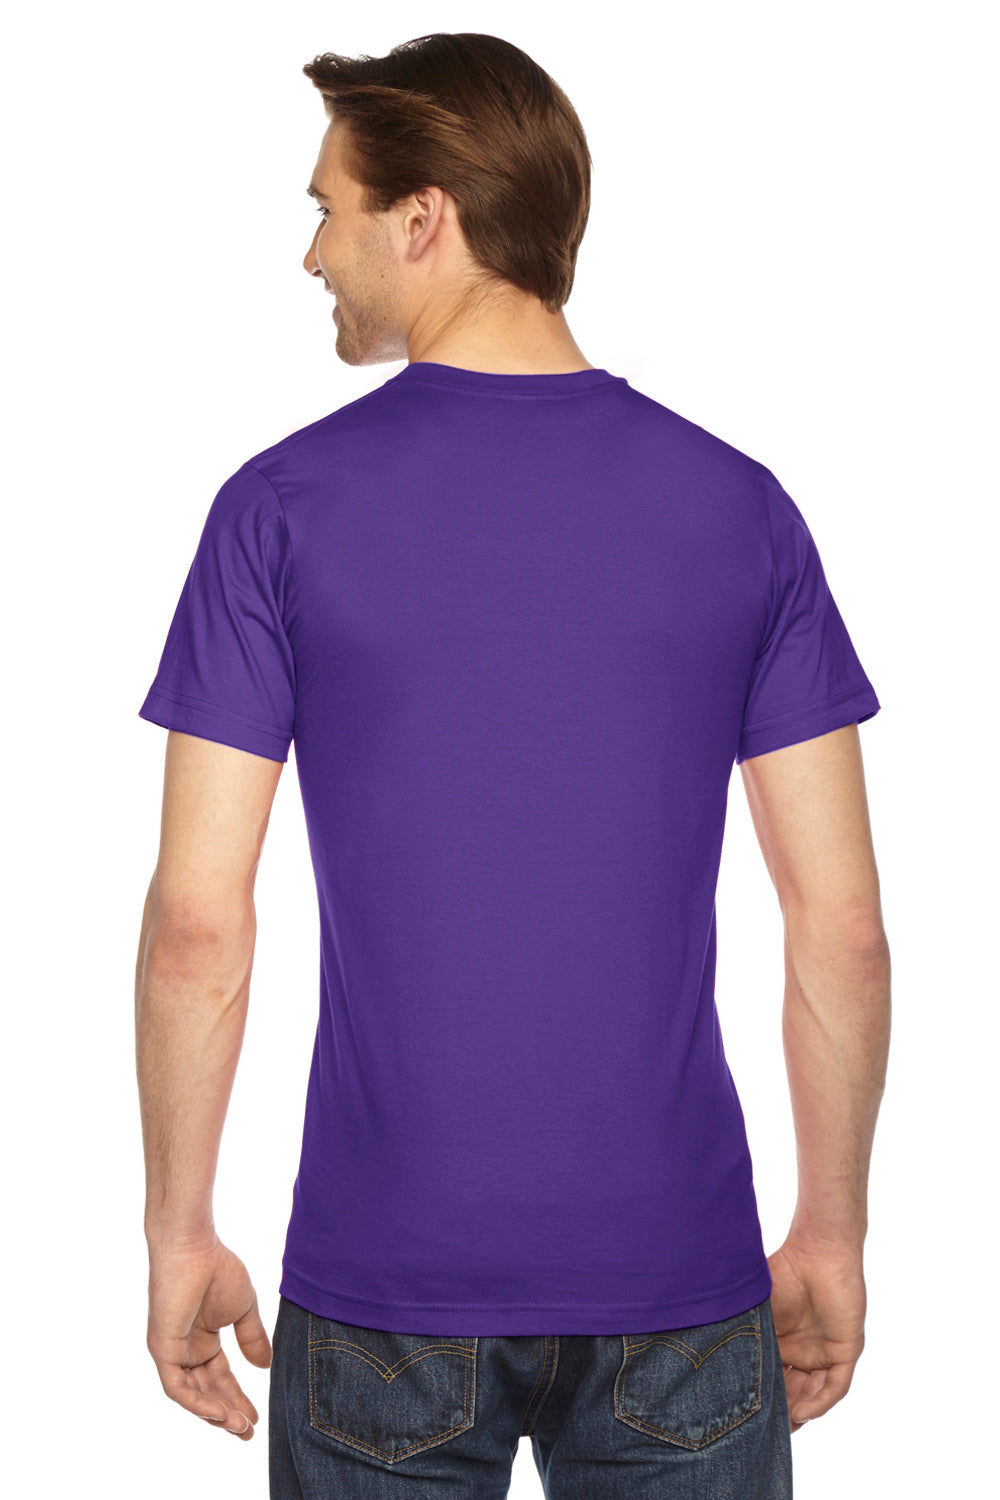 American Apparel 2001W Mens Fine Jersey Short Sleeve Crewneck T-Shirt Purple Back